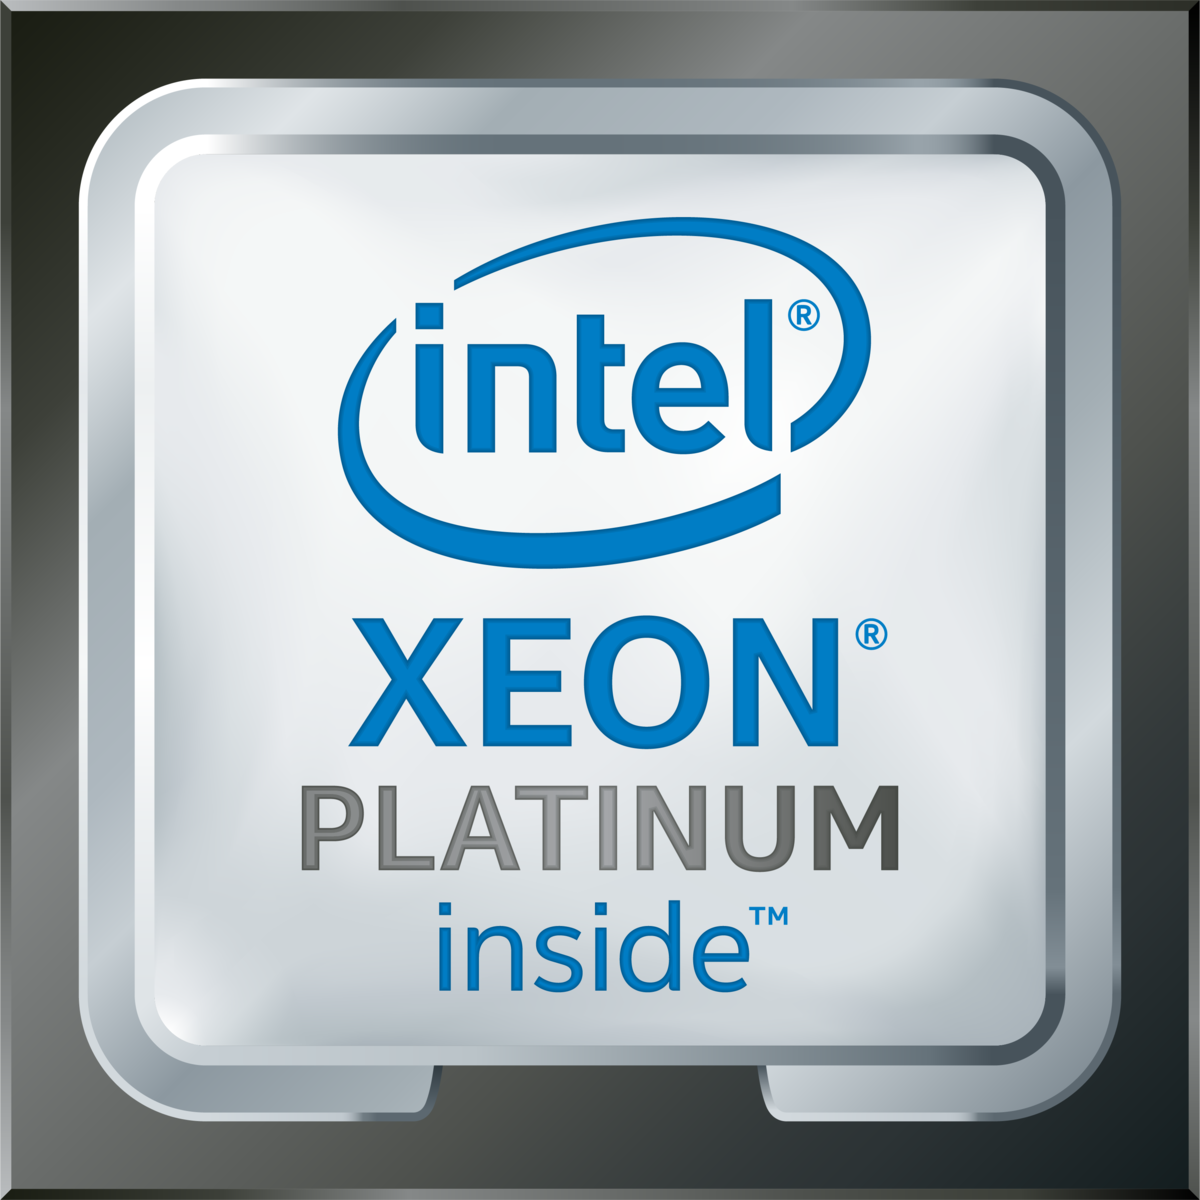 Intel(R) Xeon(R) Platinum 8370C CPU @ 2.80GHz's logo